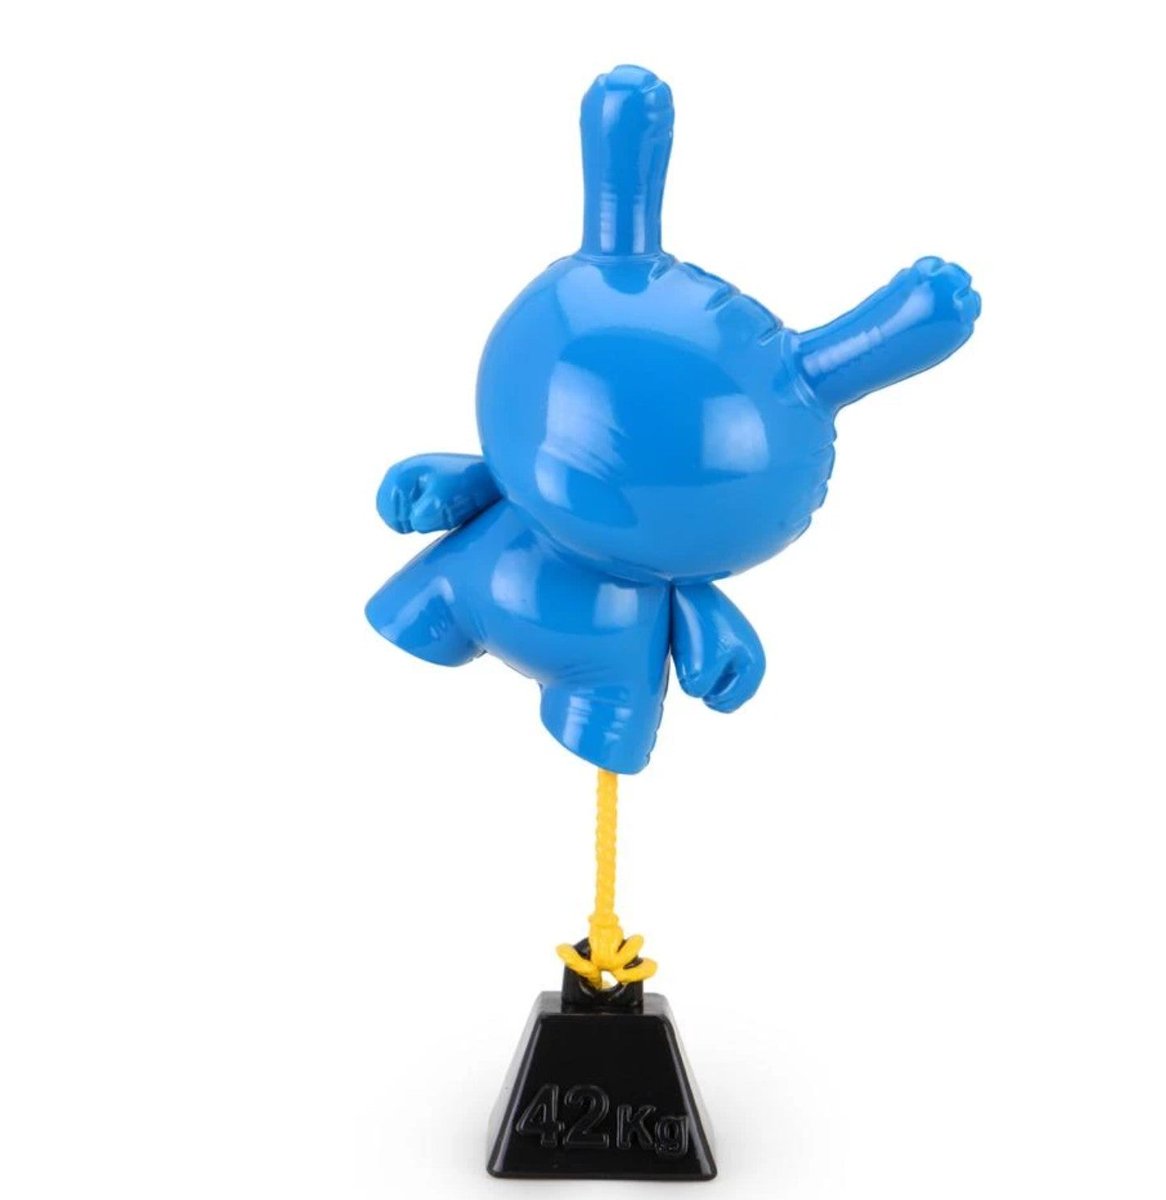 sprayedpaint.com/products/ballo…
Balloon Dunny 8 Cyan Art Toy by Kidrobot x Wendigo Toys
#sculpture #artsculpture #ArtStatue #PopArtSculpture #GraffitiSculpture #art #graffiti #streetart #2020 #Animal #Balloon #Blue #Dunny #Figure #Kidrobot #Plastic #Rabbit #Sale #Vinyl #popart #graffi...